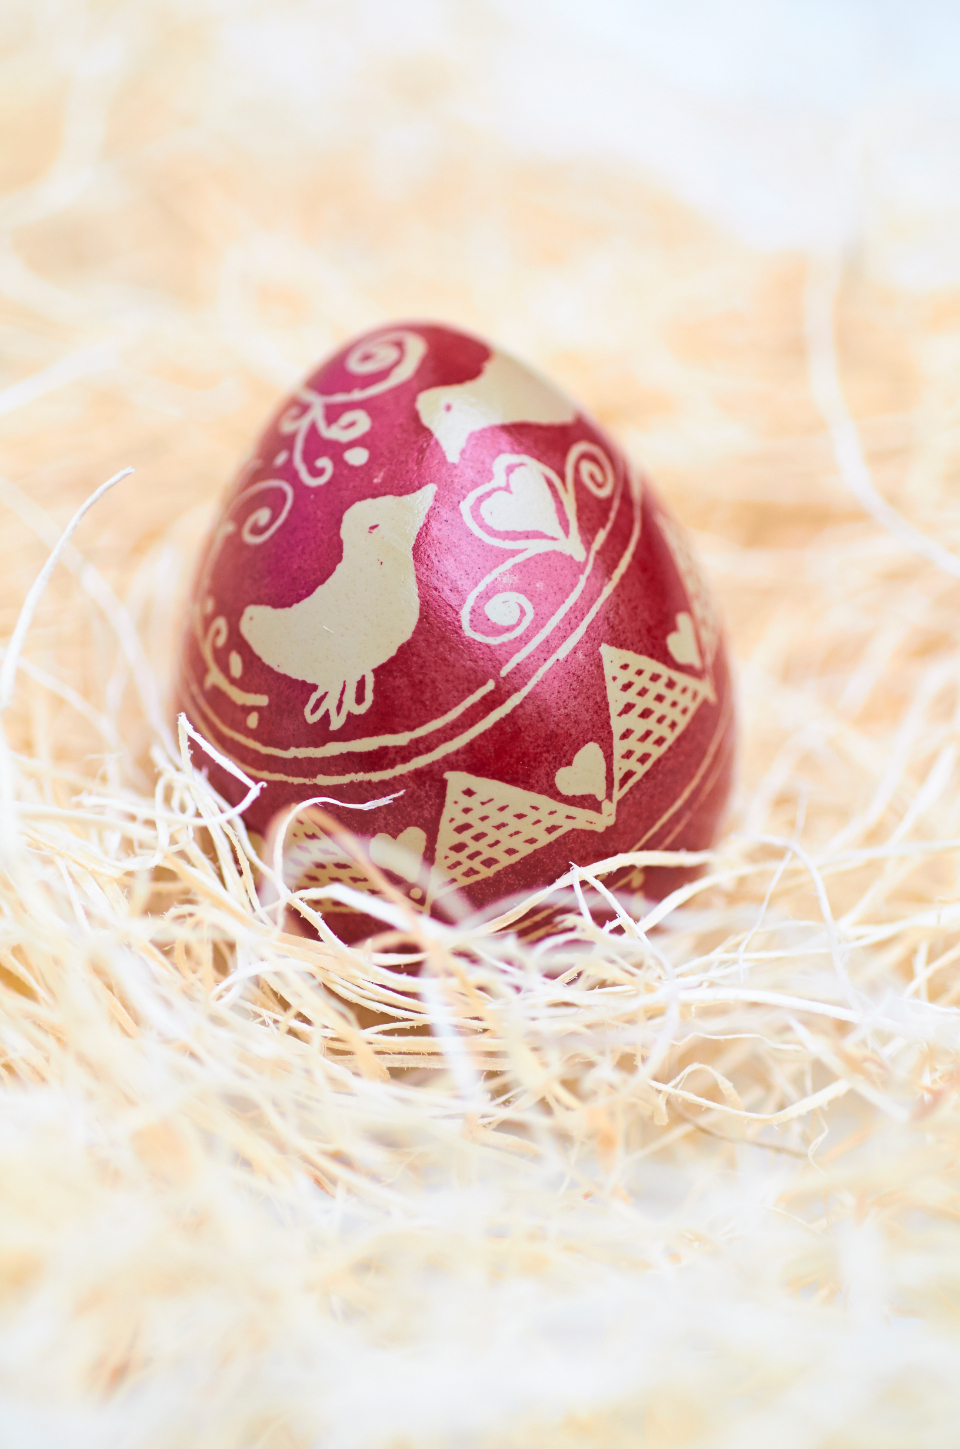 Decorative Easter